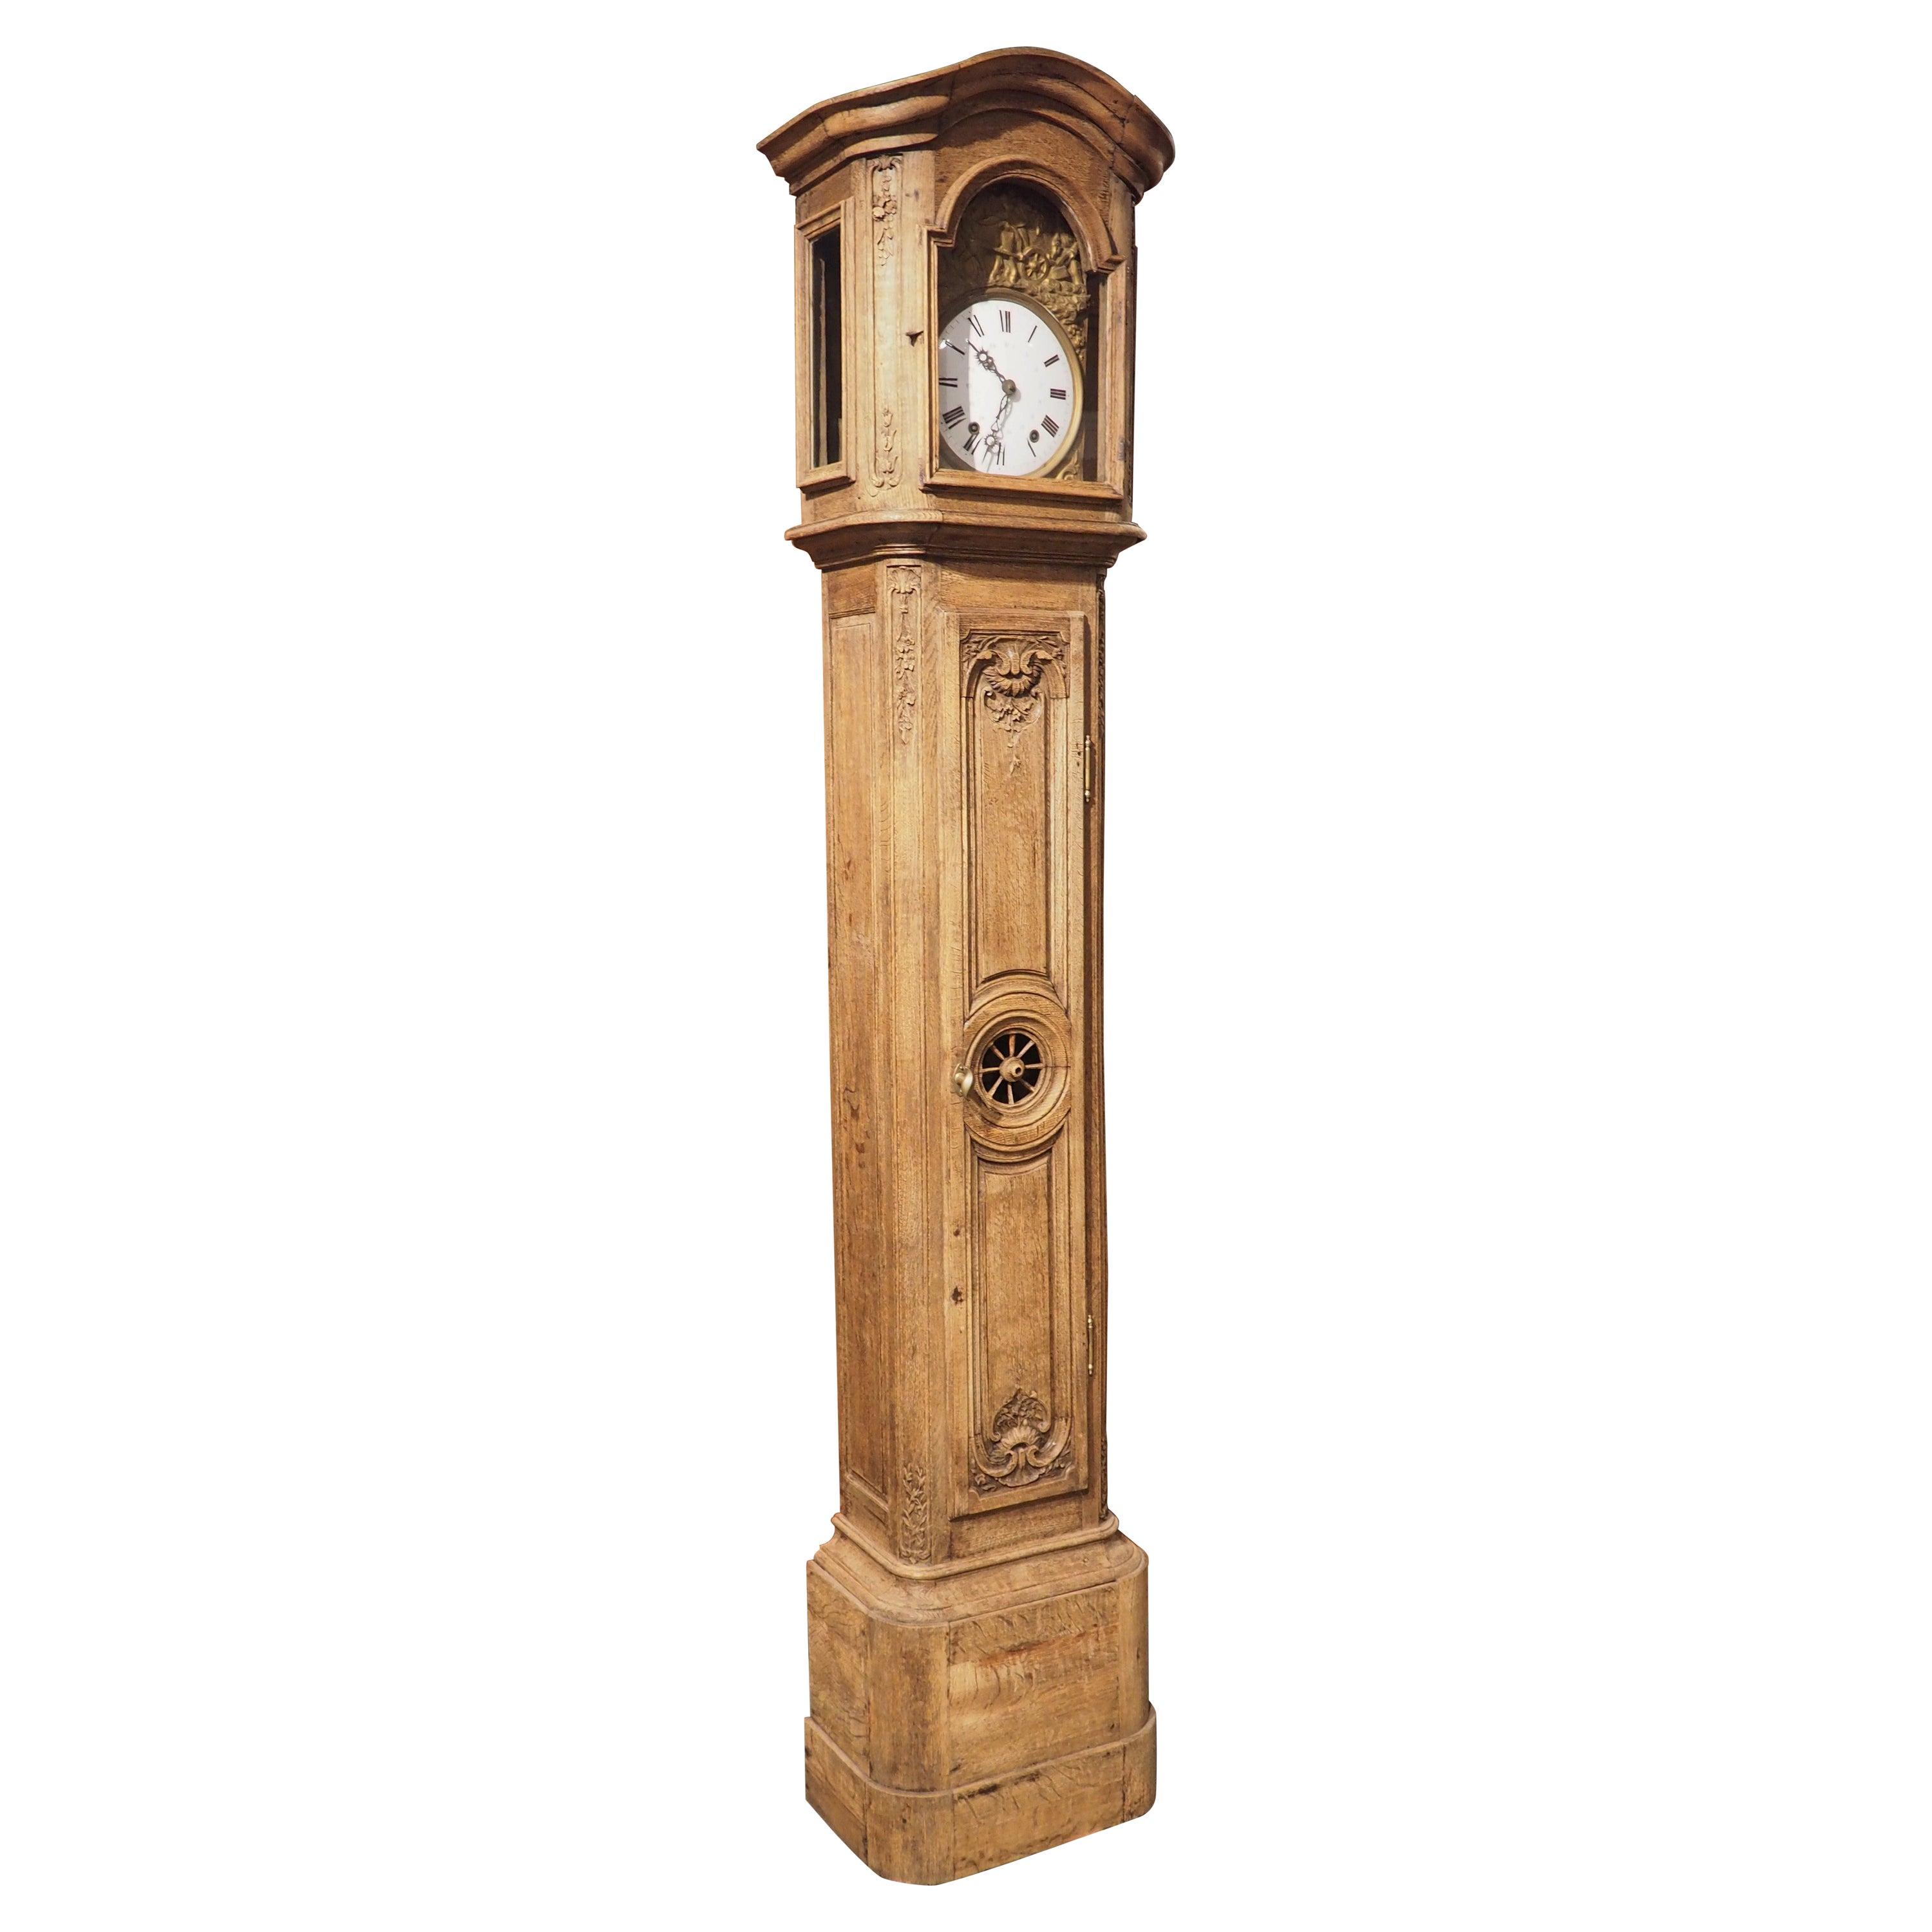 Bleached Oak Horloge De Parquet Clock Case from Liege, Belgium, circa 1870